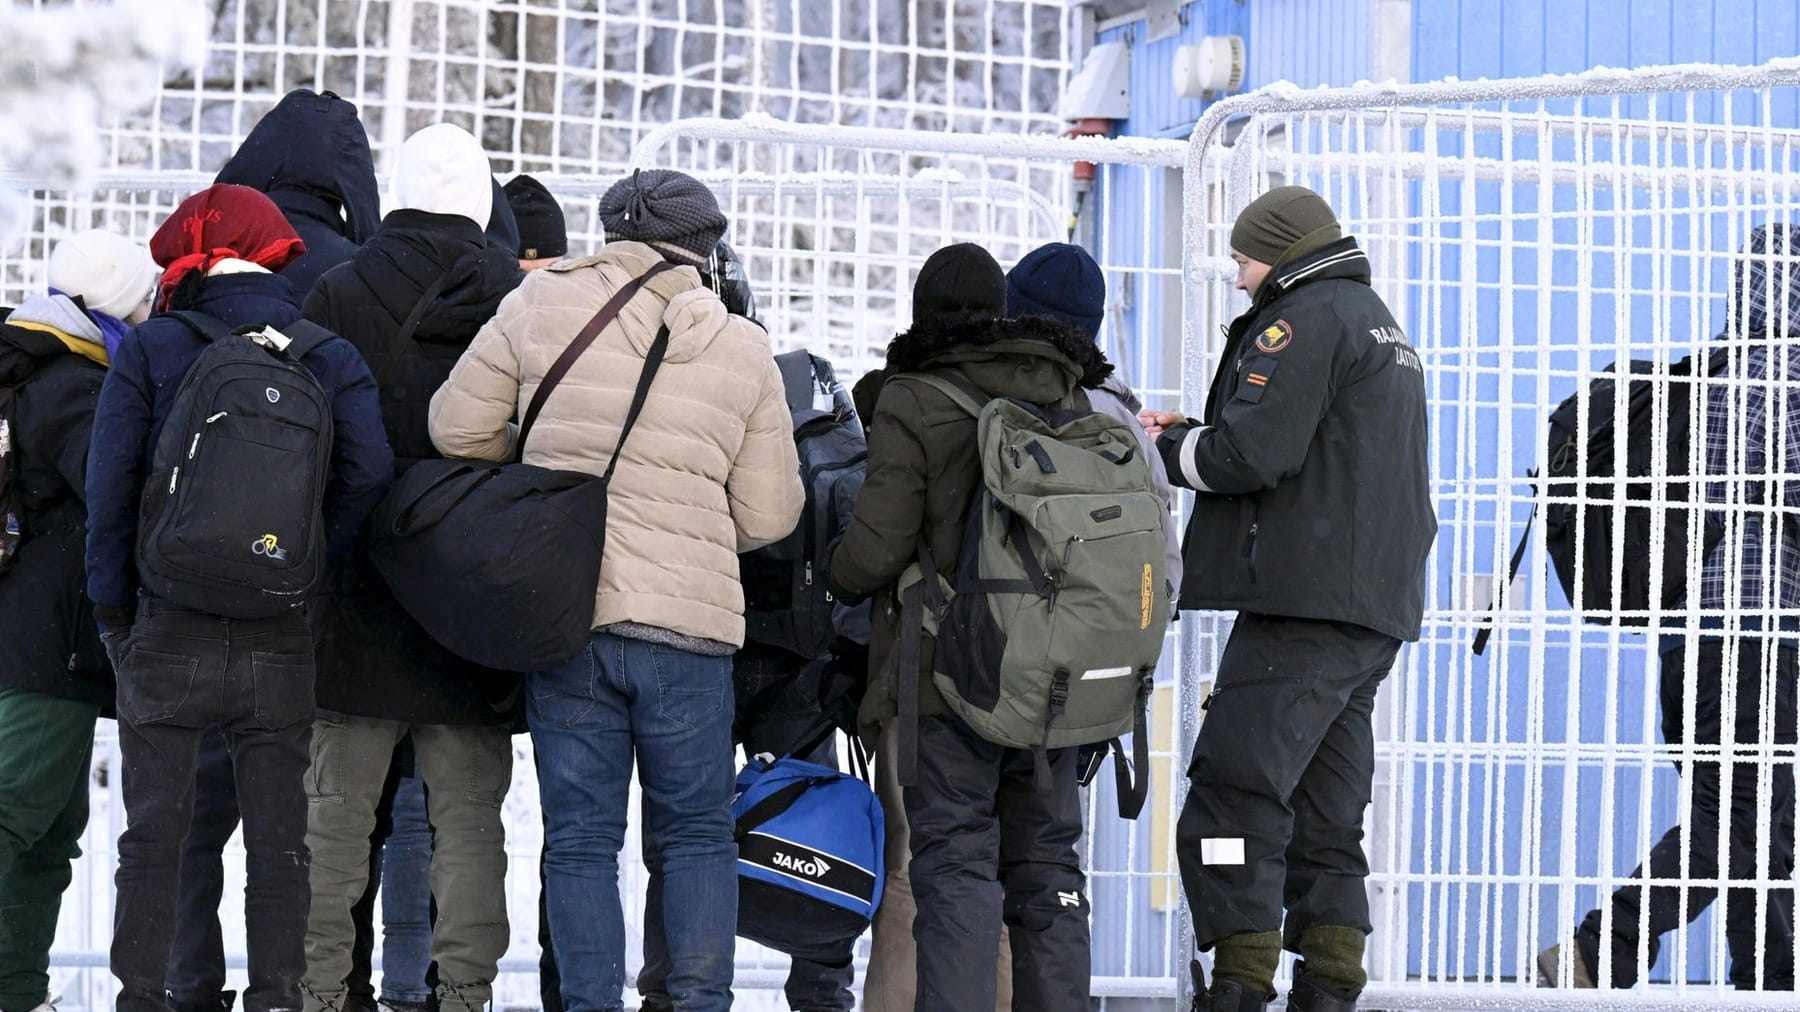 Russia escalates border conflict – migrants 'like pawns'